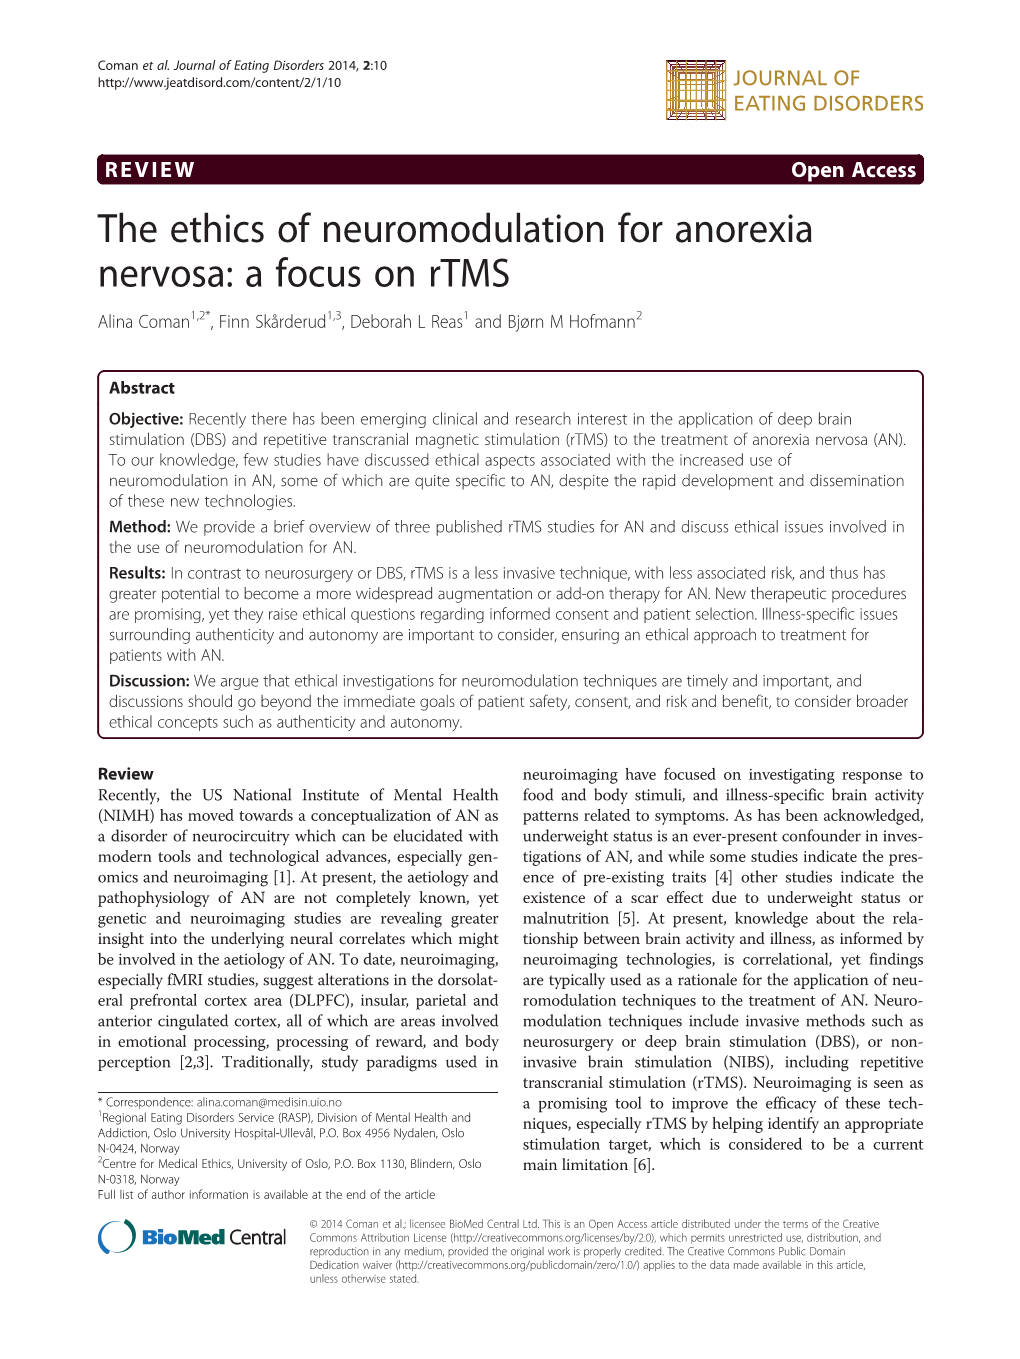 The Ethics of Neuromodulation for Anorexia Nervosa: a Focus on Rtms Alina Coman1,2*, Finn Skårderud1,3, Deborah L Reas1 and Bjørn M Hofmann2